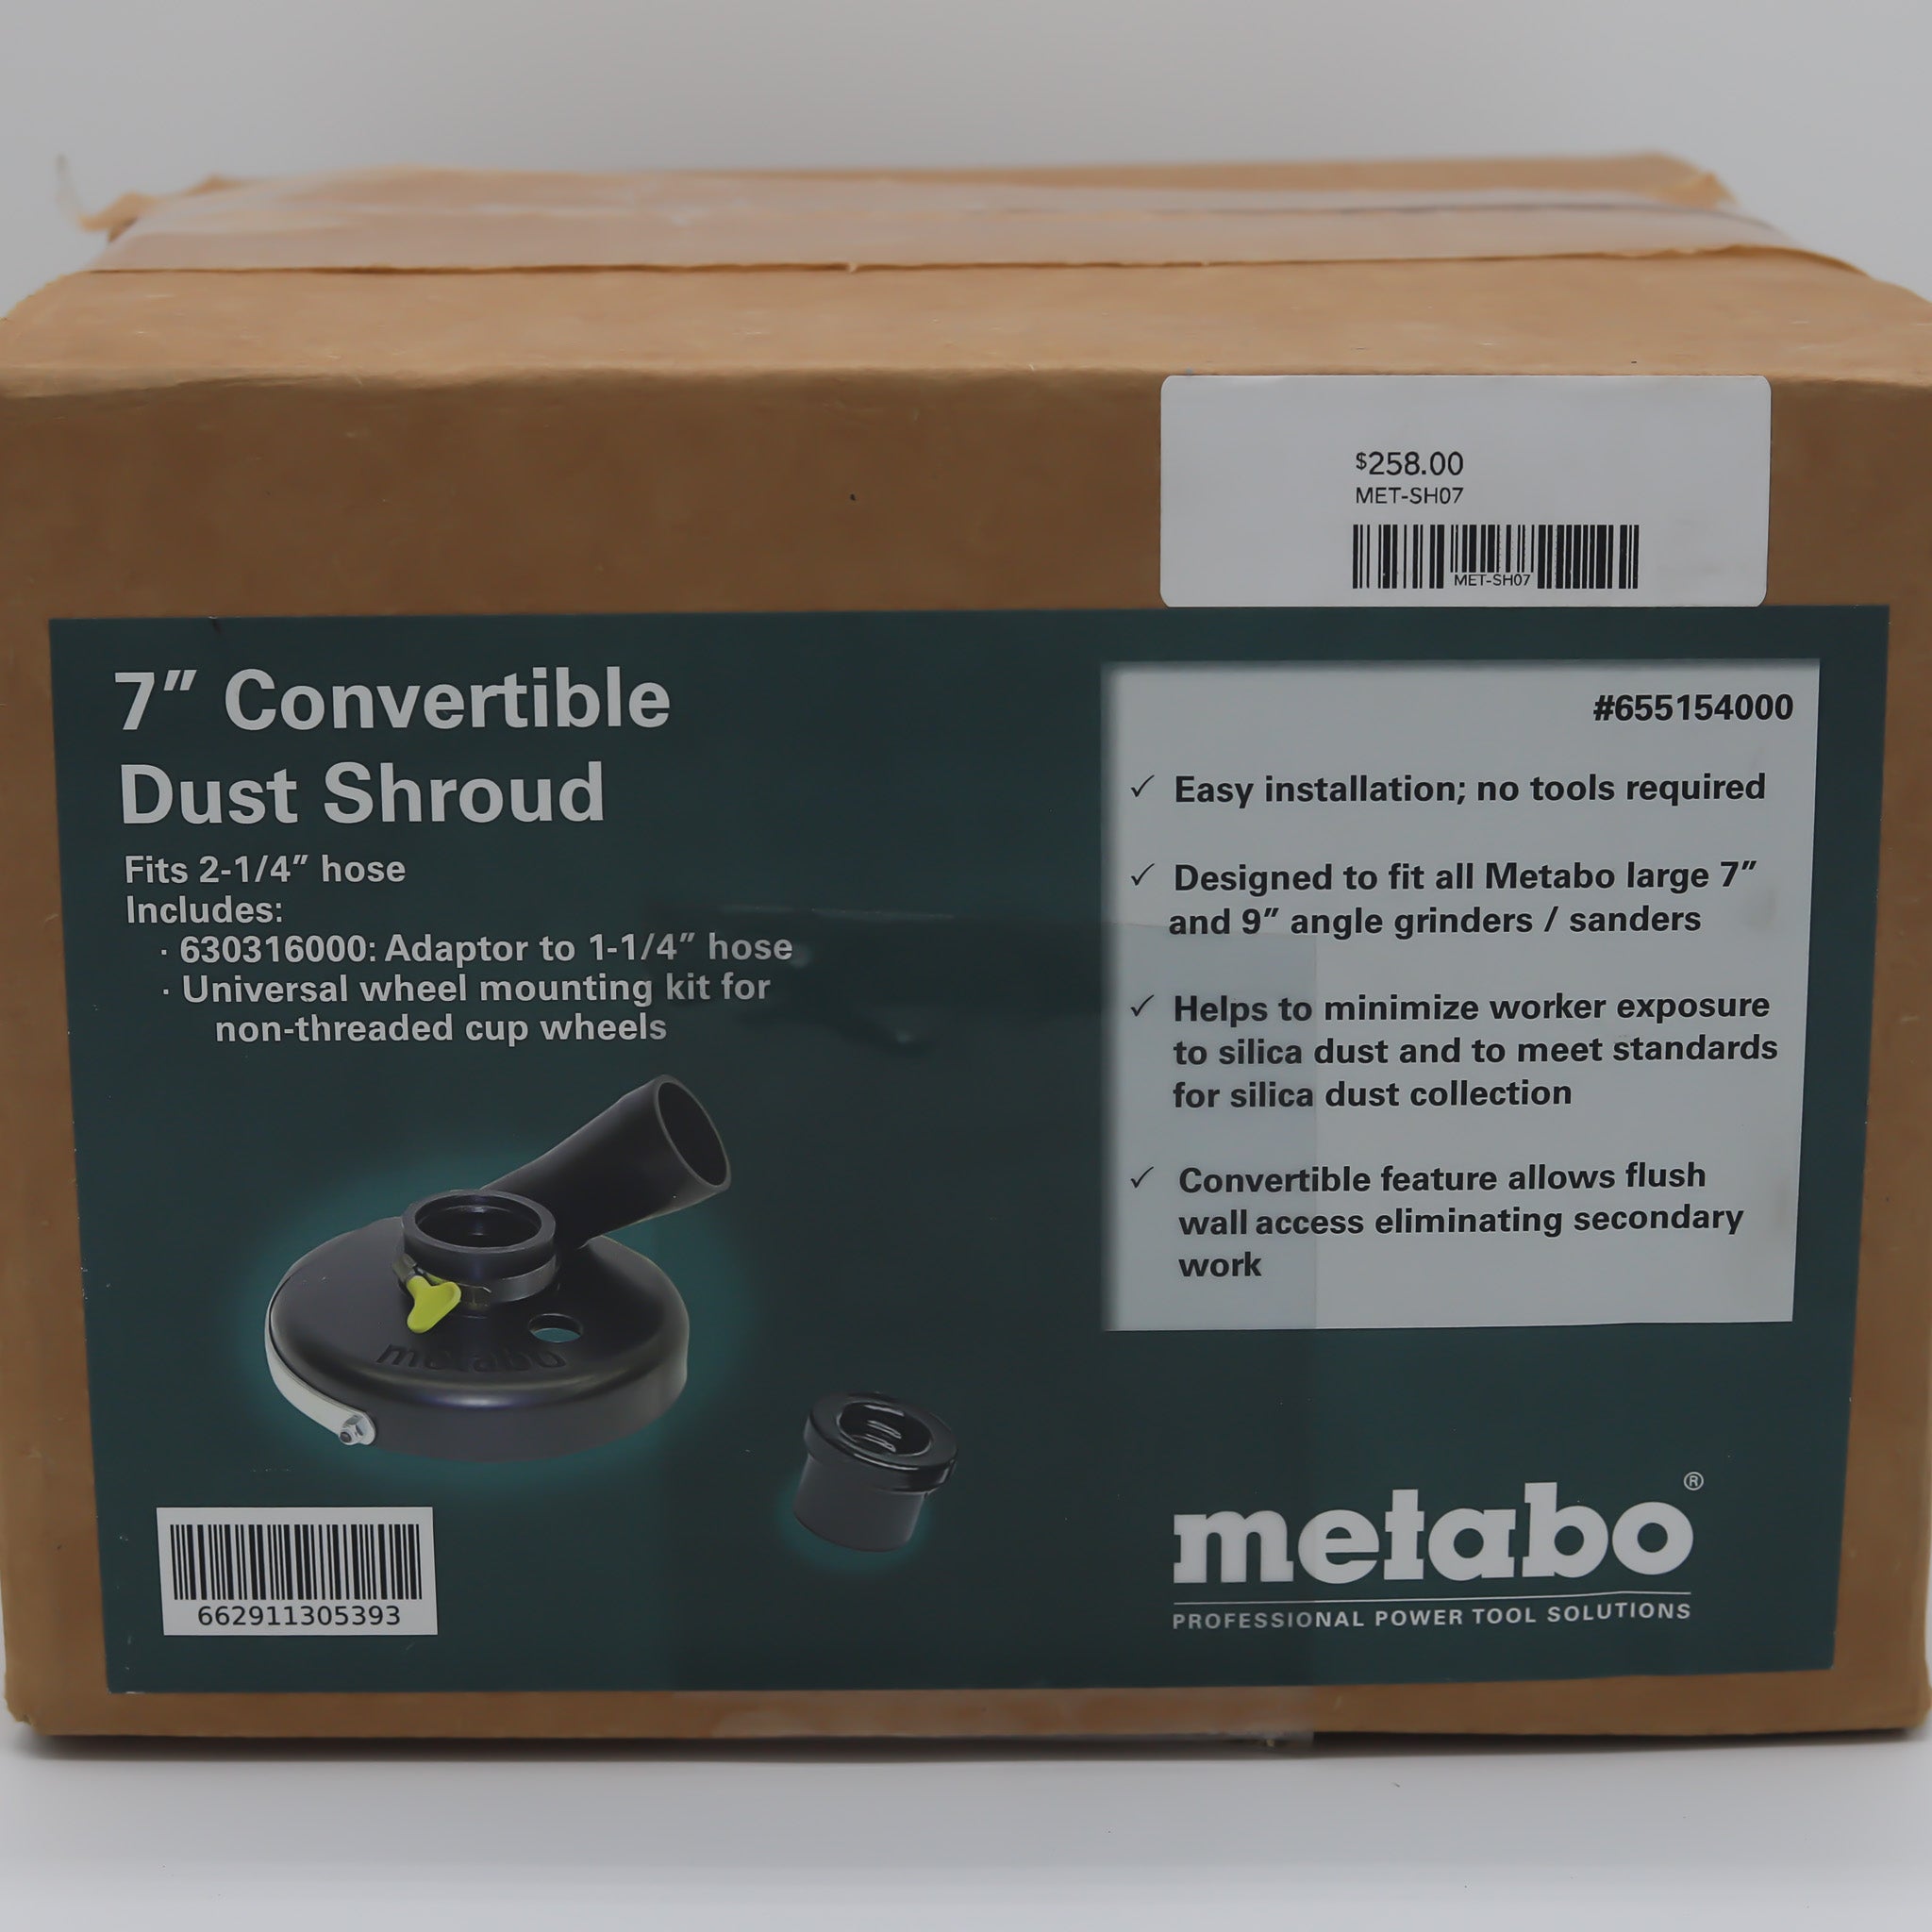 Metabo 7" Convertible Dust Shroud